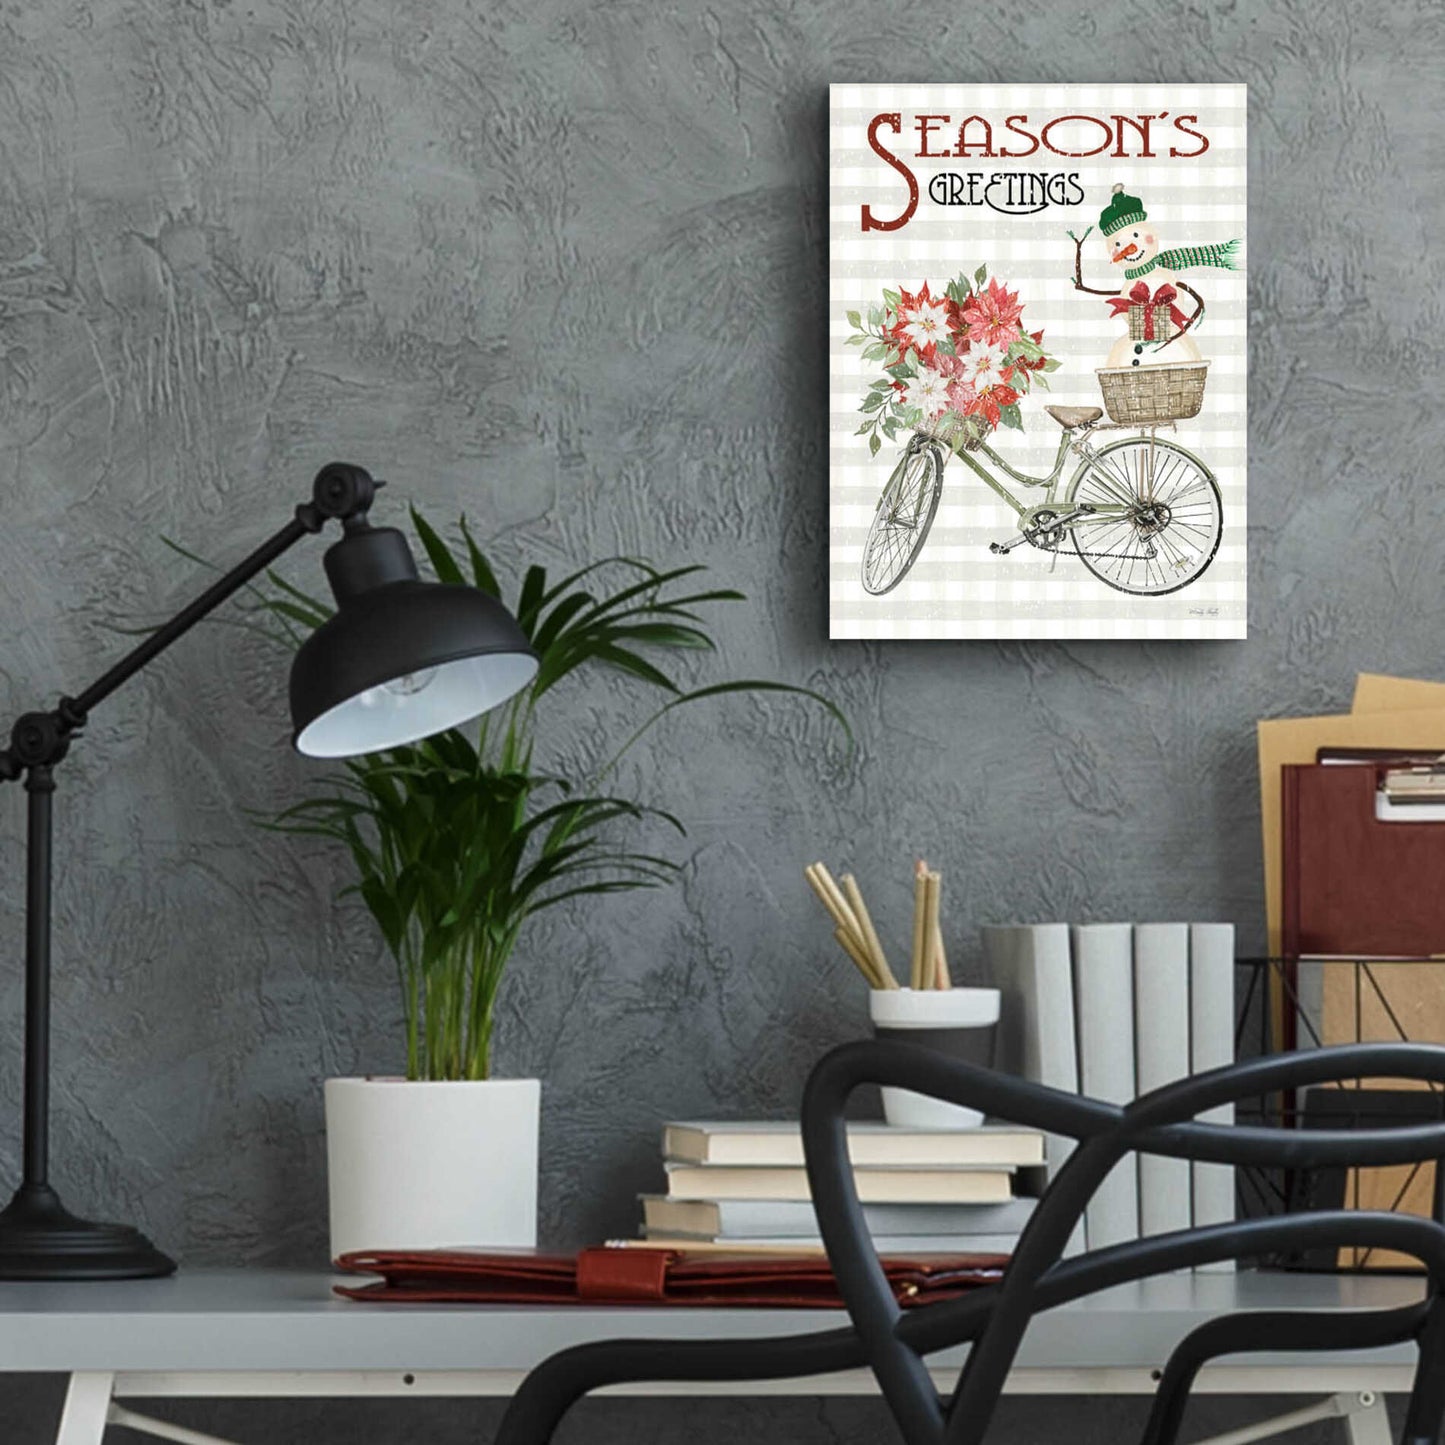 Epic Art 'Season's Greetings Bicycle' by Cindy Jacobs, Acrylic Glass Wall Art,12x16